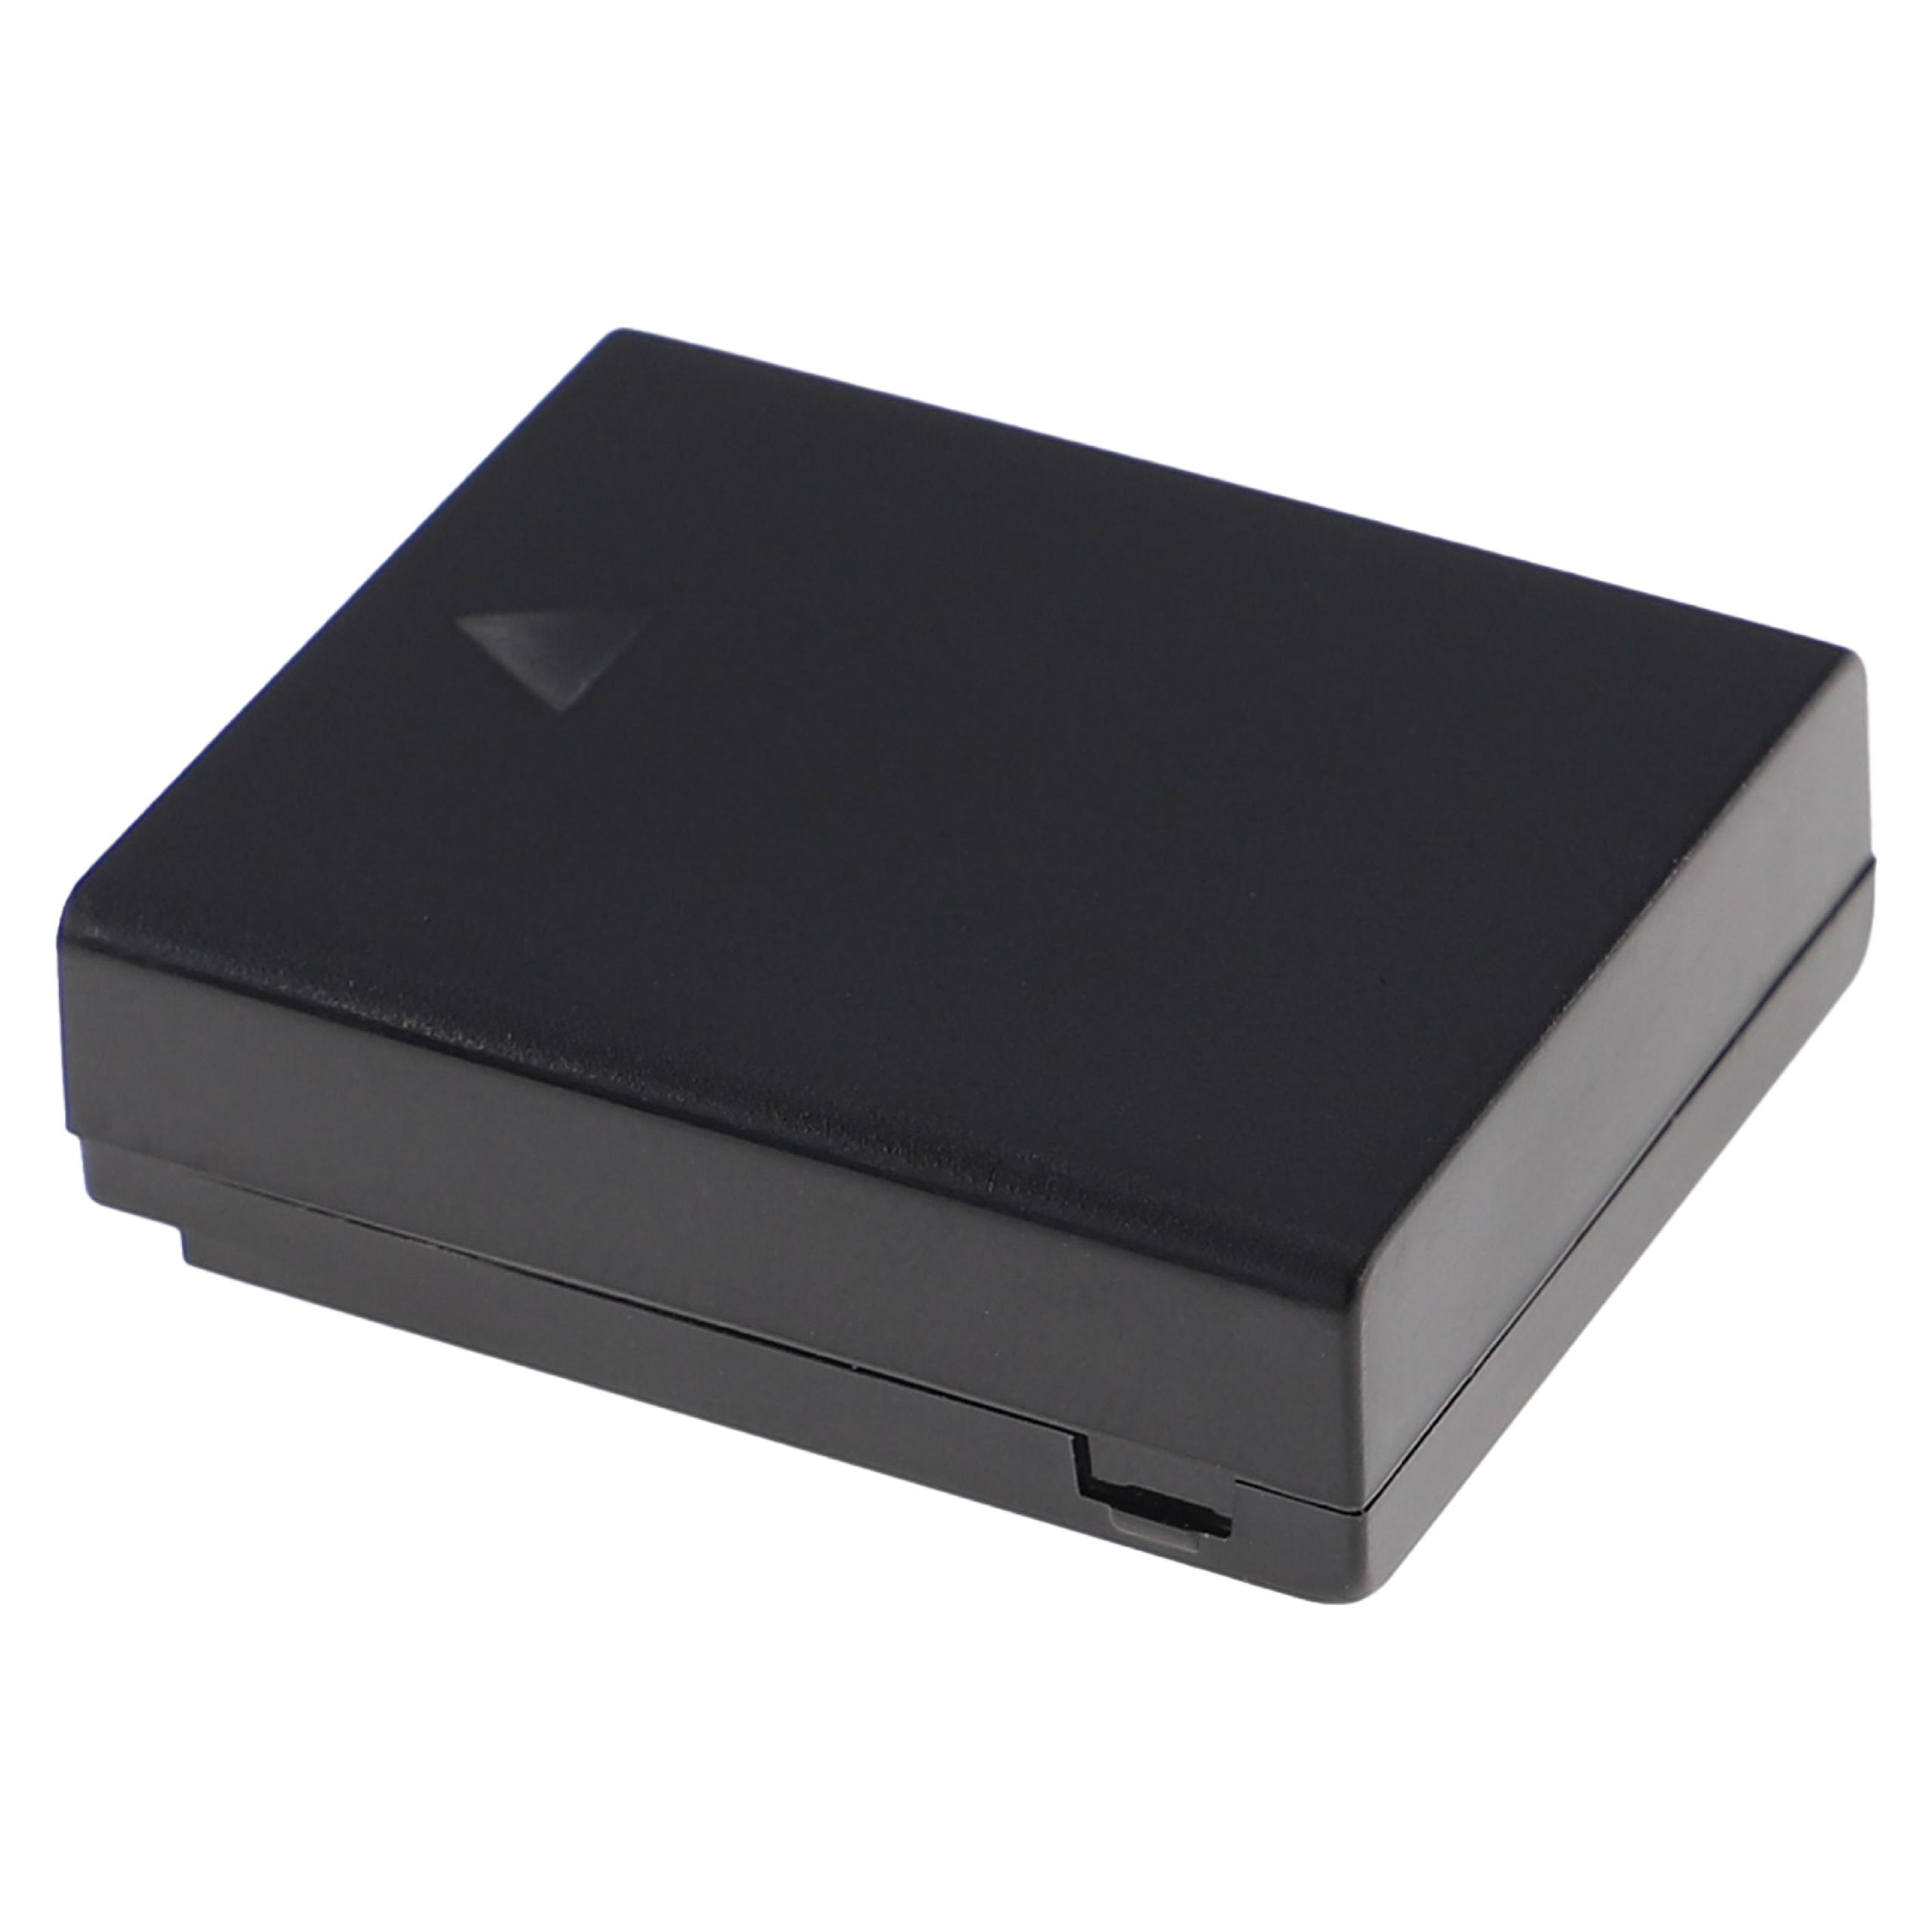 Akumulator do aparatu cyfrowego zamiennik Panasonic CGA-S002A/1B, CGA-S002E/1B - 700 mAh 7,4 V Li-Ion